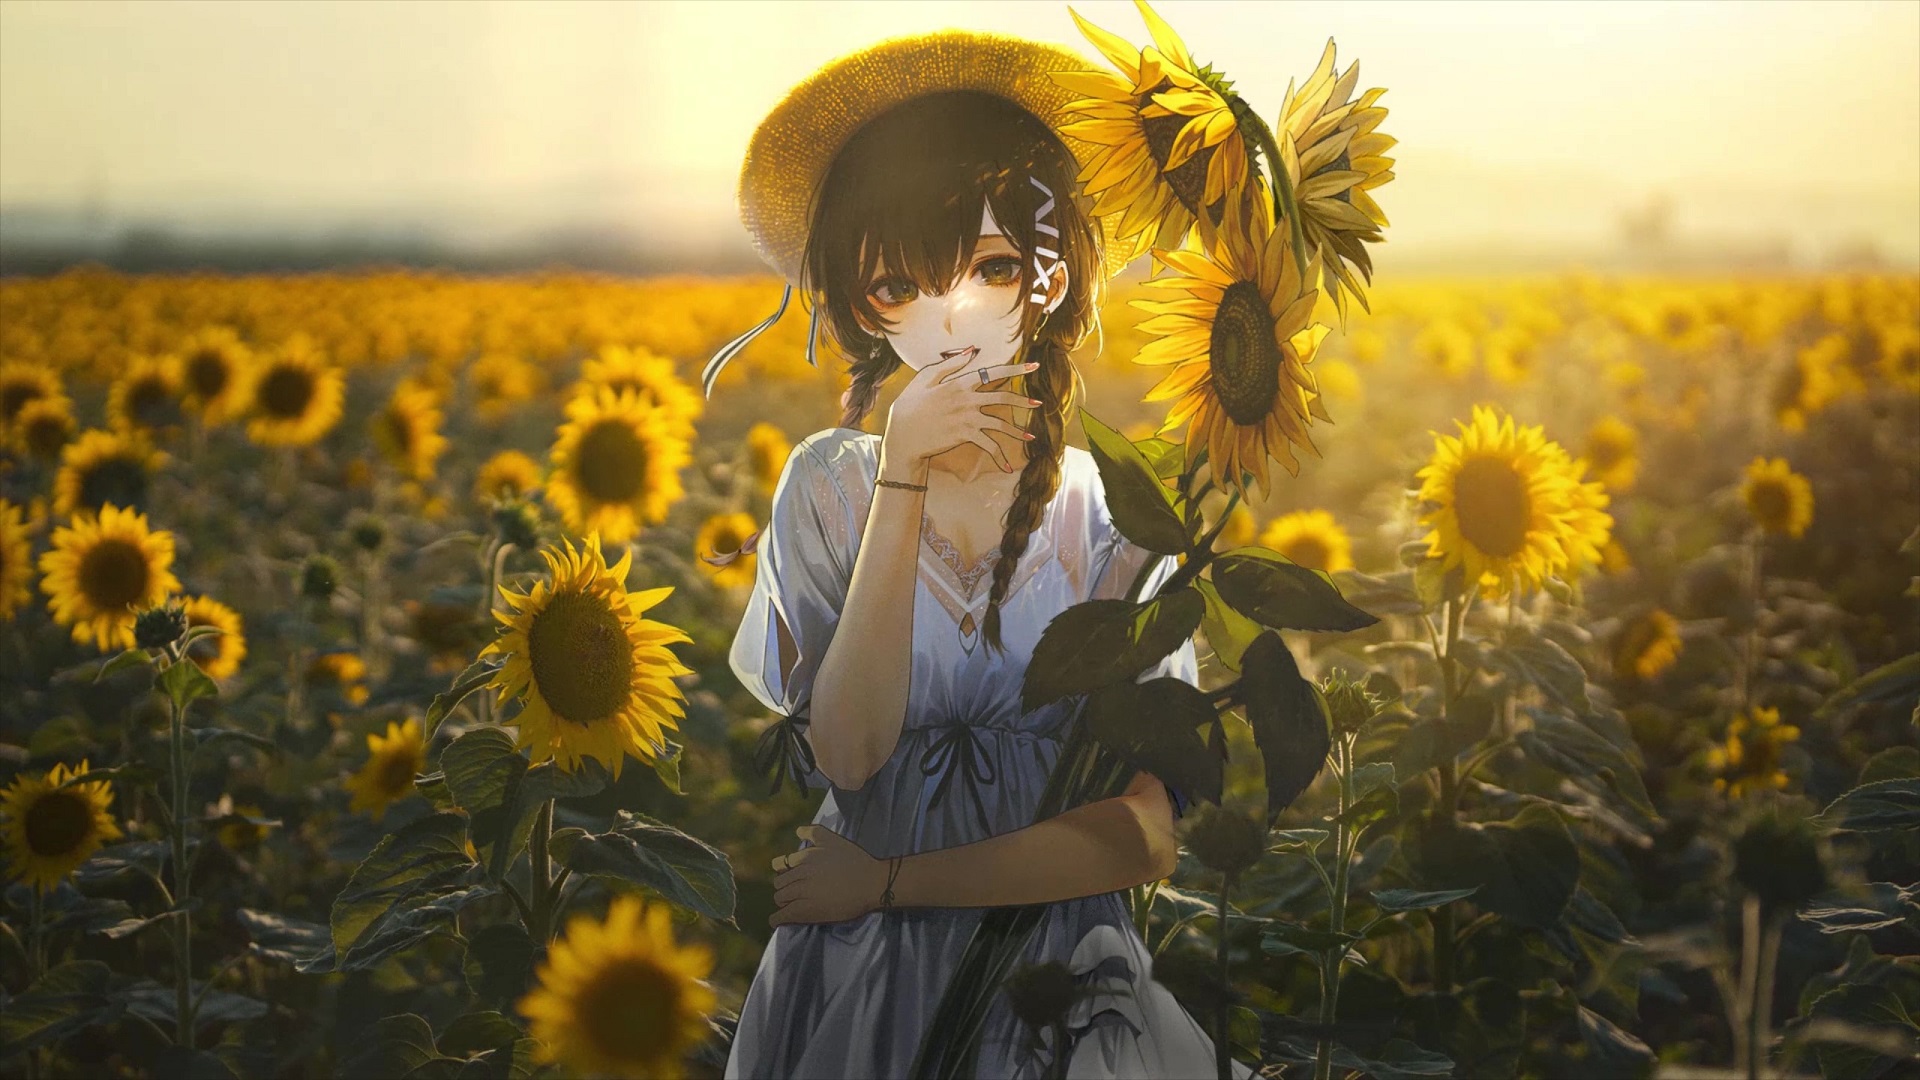 Steam Workshop::Anime Girl (Summer) with Sunflowers (60 fps) (4k)